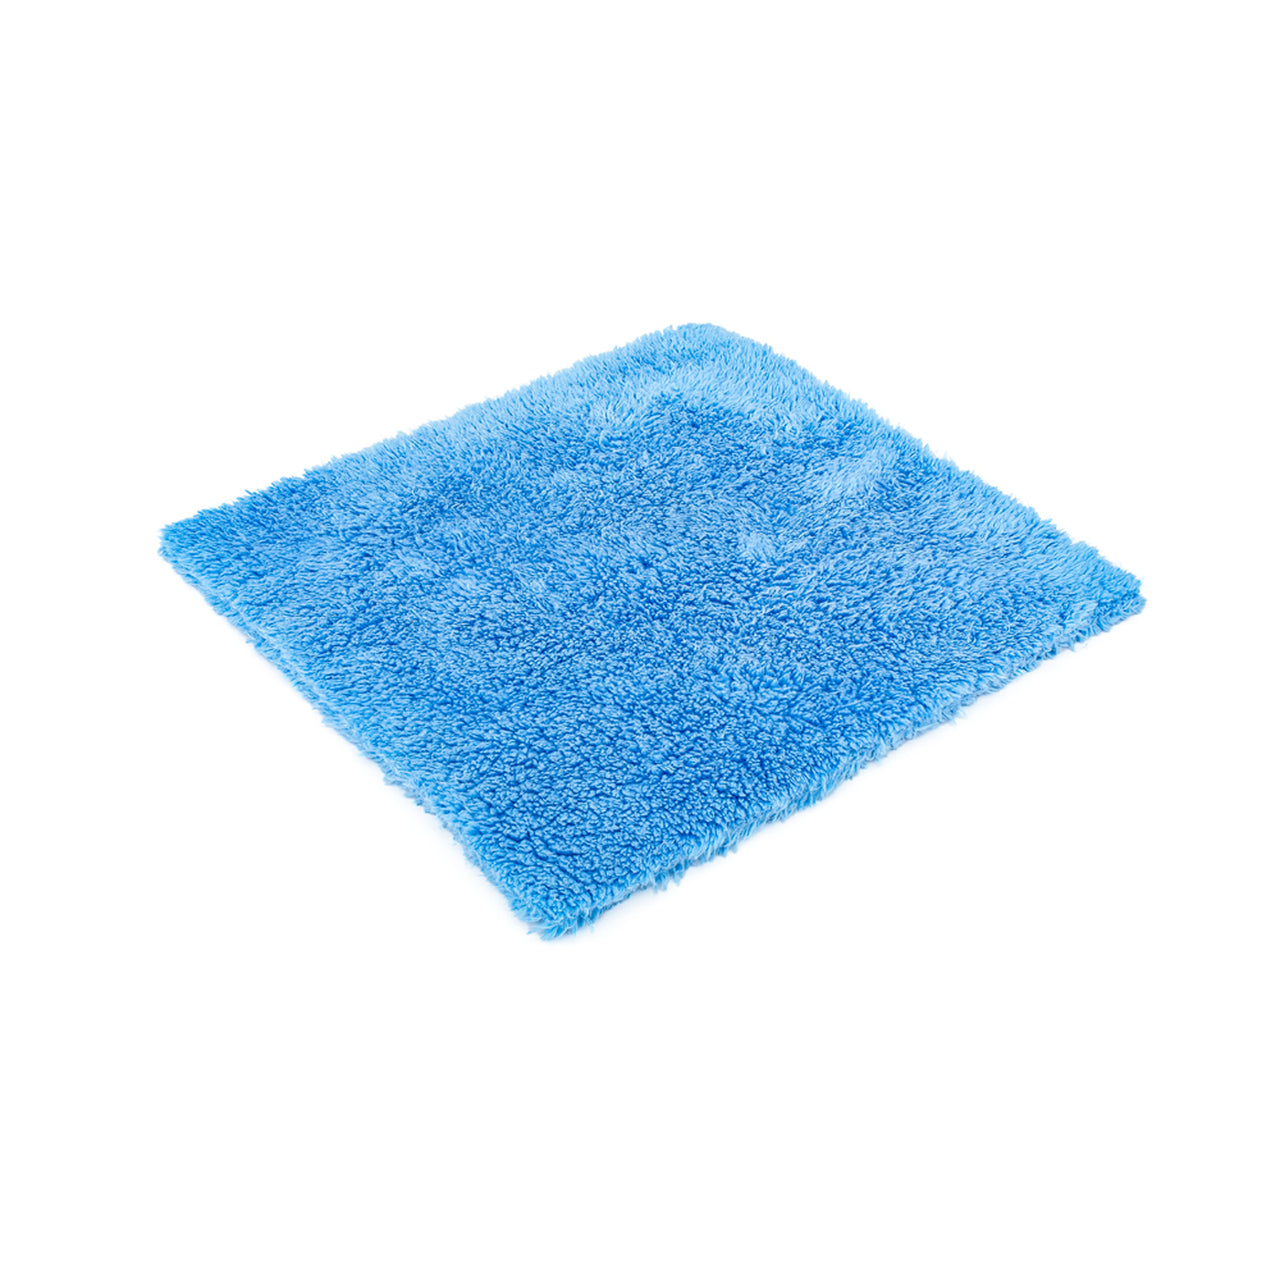 The Rag Company 8 X 8 The Eaglet 500 Ultra Plush Microfiber Towel - Blue